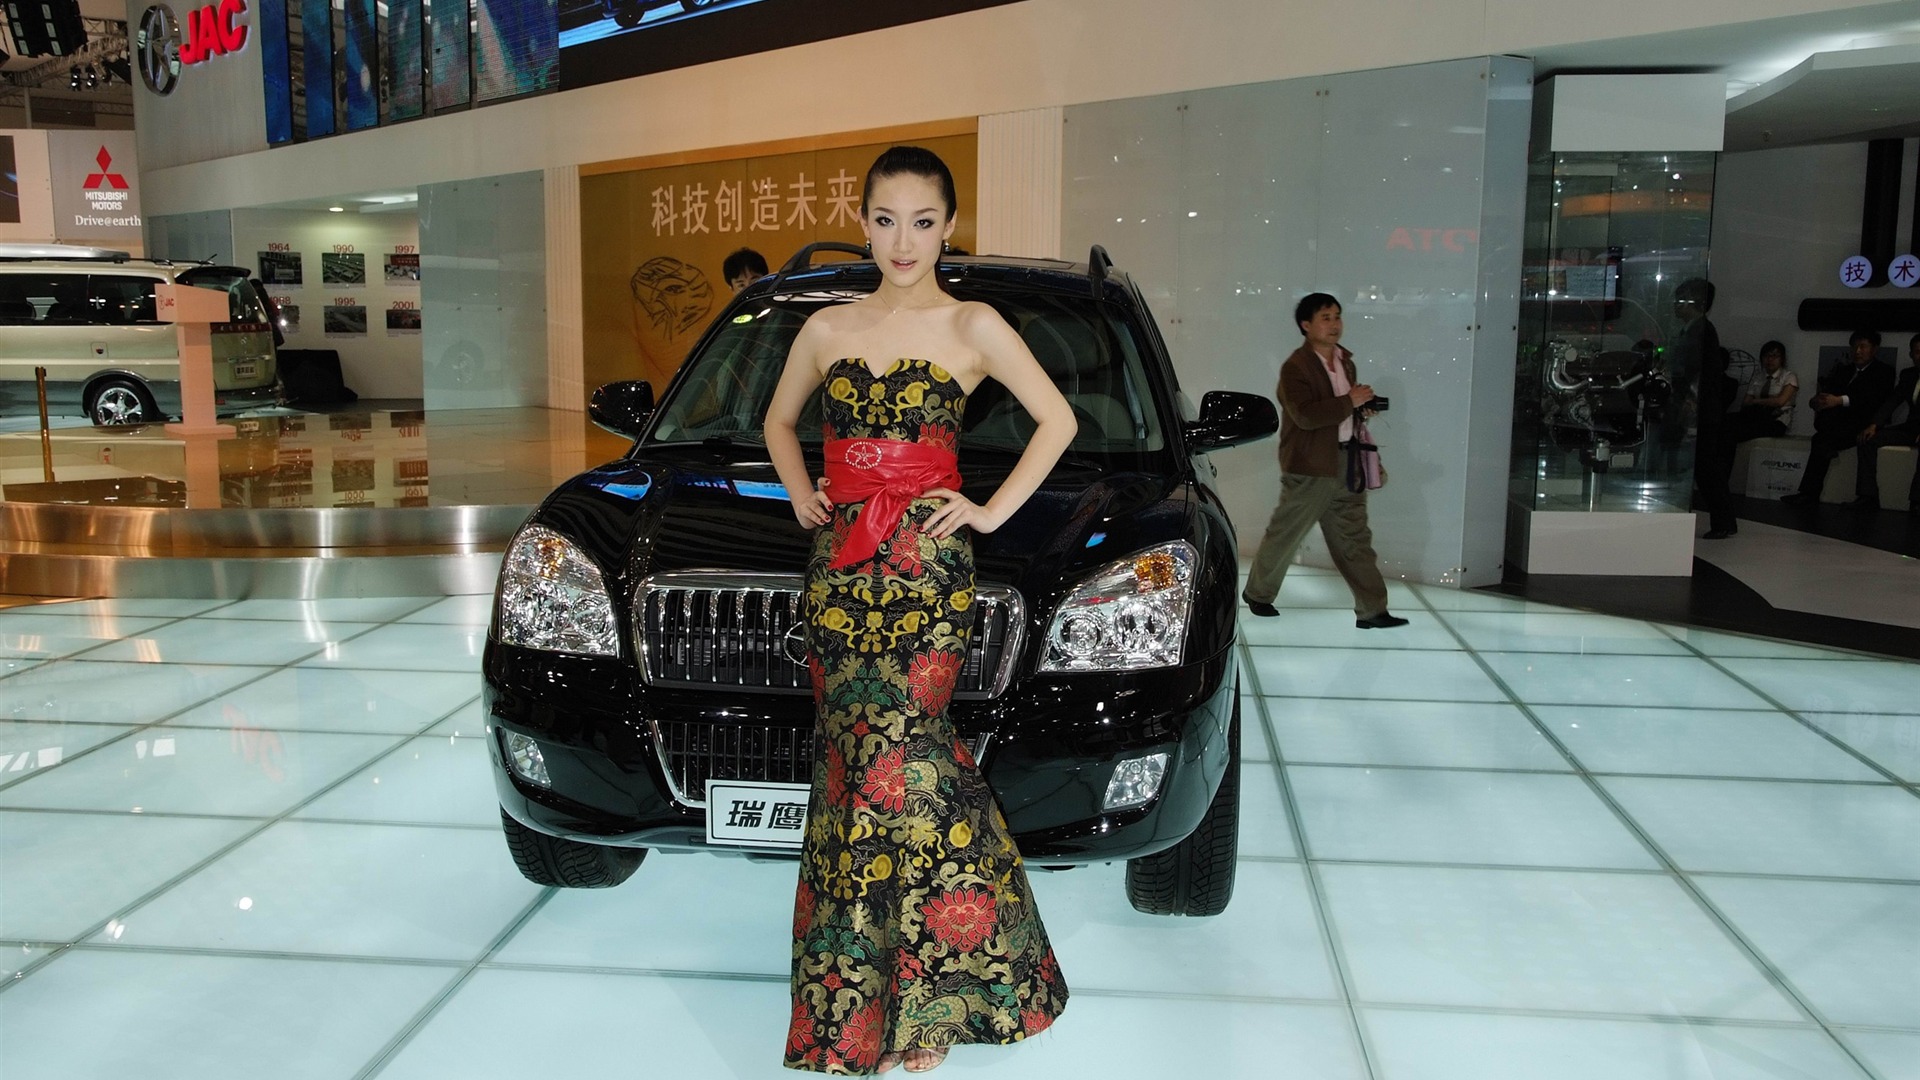 2010 Salón Internacional del Automóvil de Beijing Heung Che belleza (obras barras de refuerzo) #4 - 1920x1080